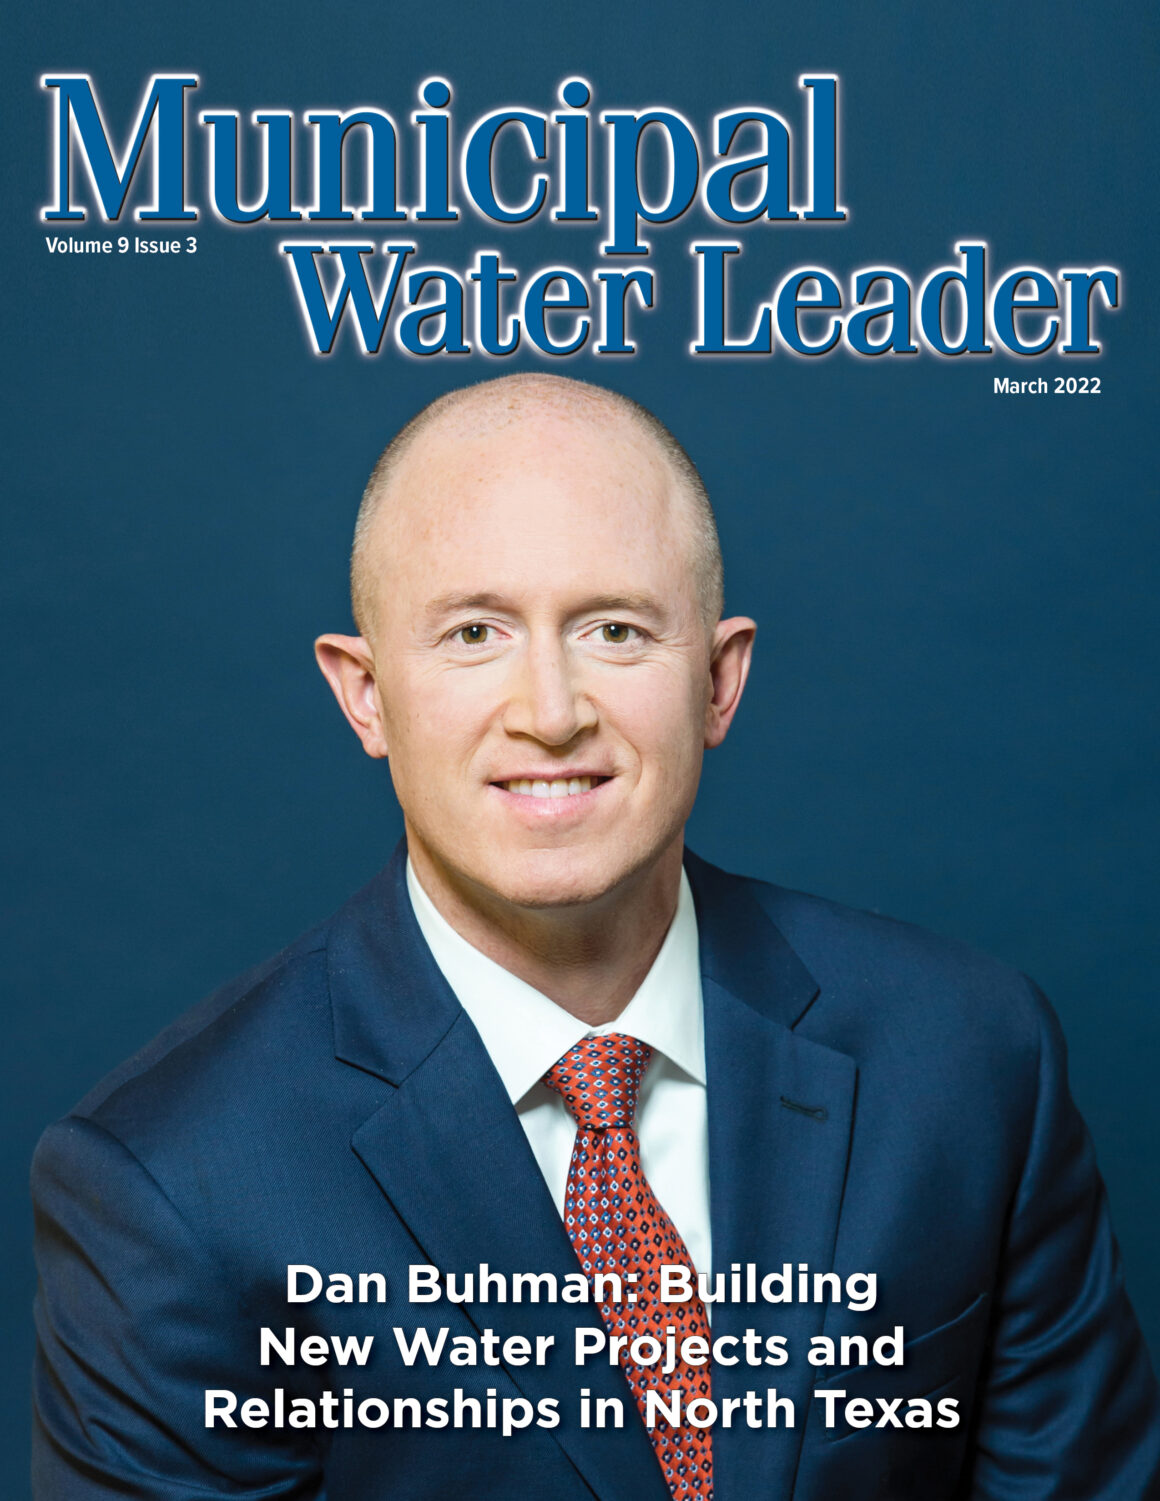 TRWD General Manager Dan Buhman featured in Municipal Water Leader Magazine